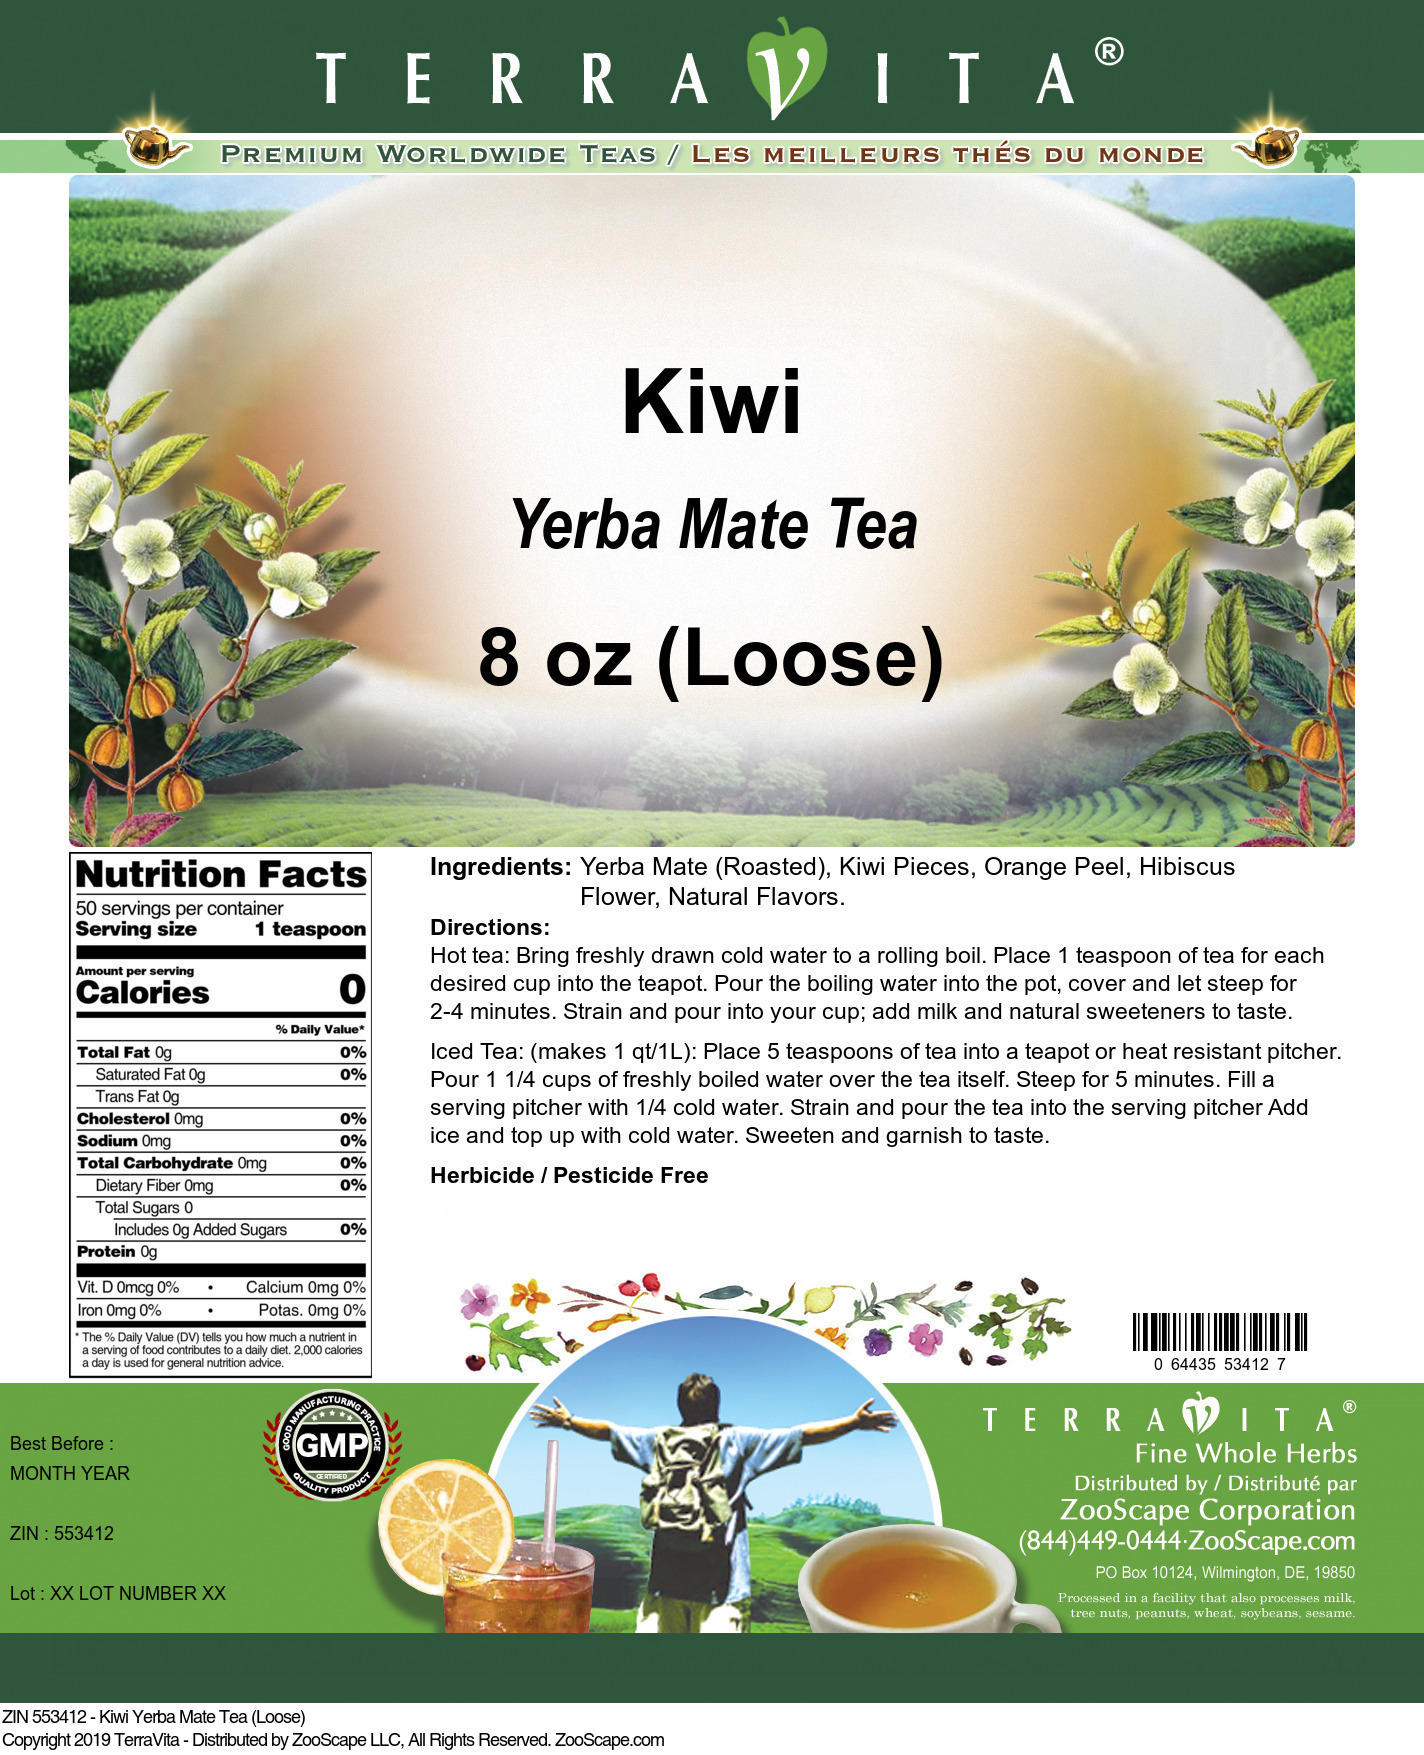 Kiwi Yerba Mate Tea (Loose) - Label